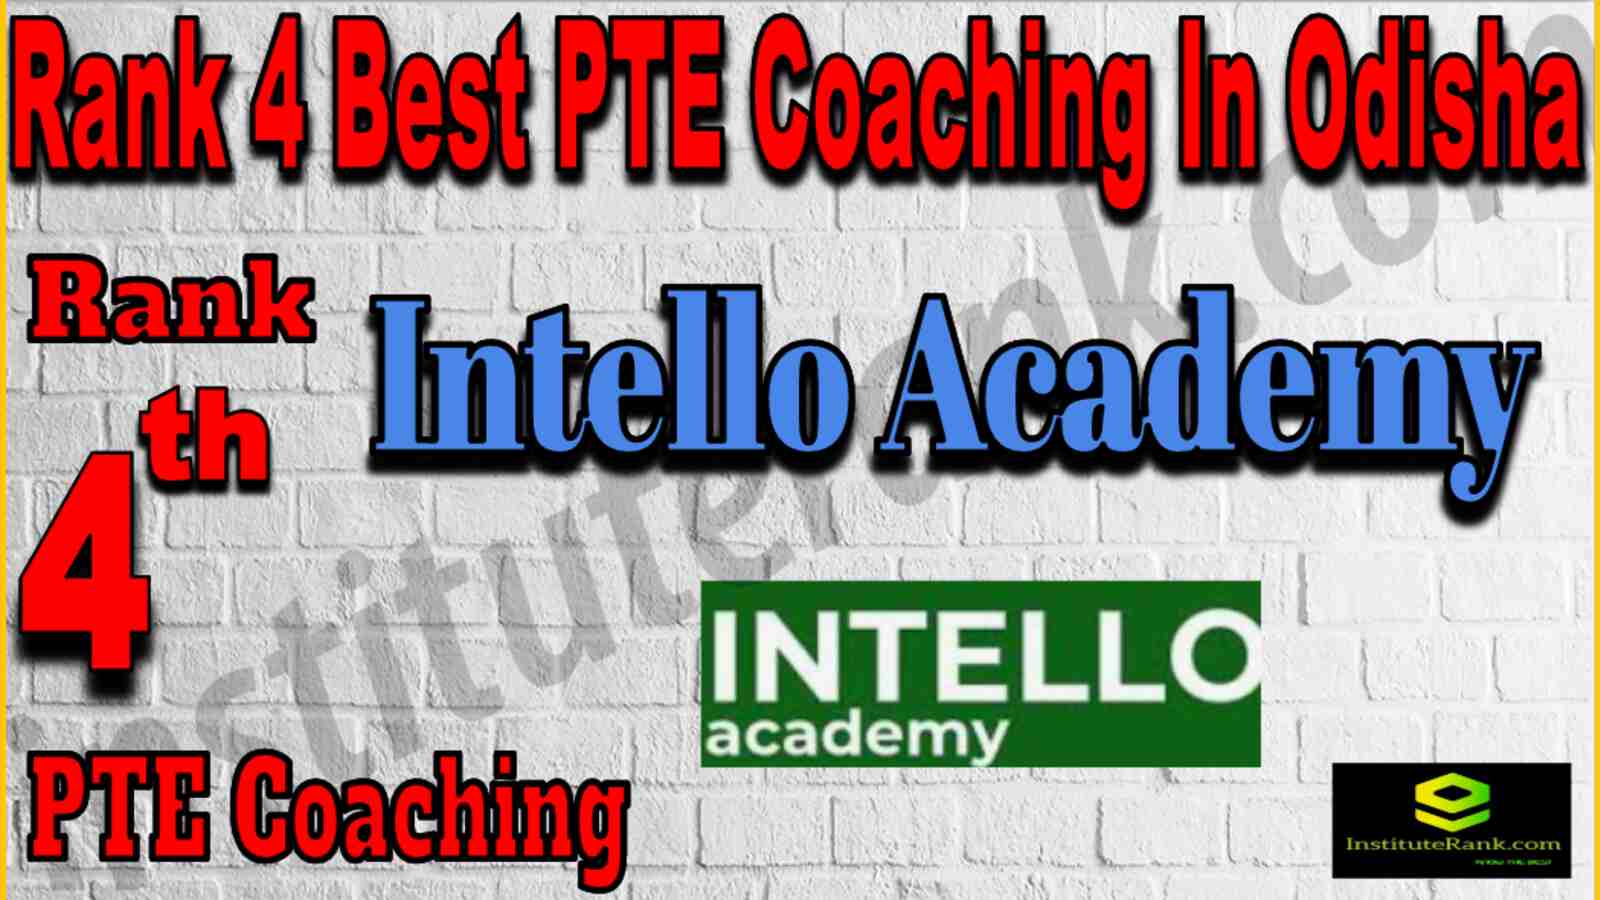 Rank 4 Best PTE Coaching in Odisha